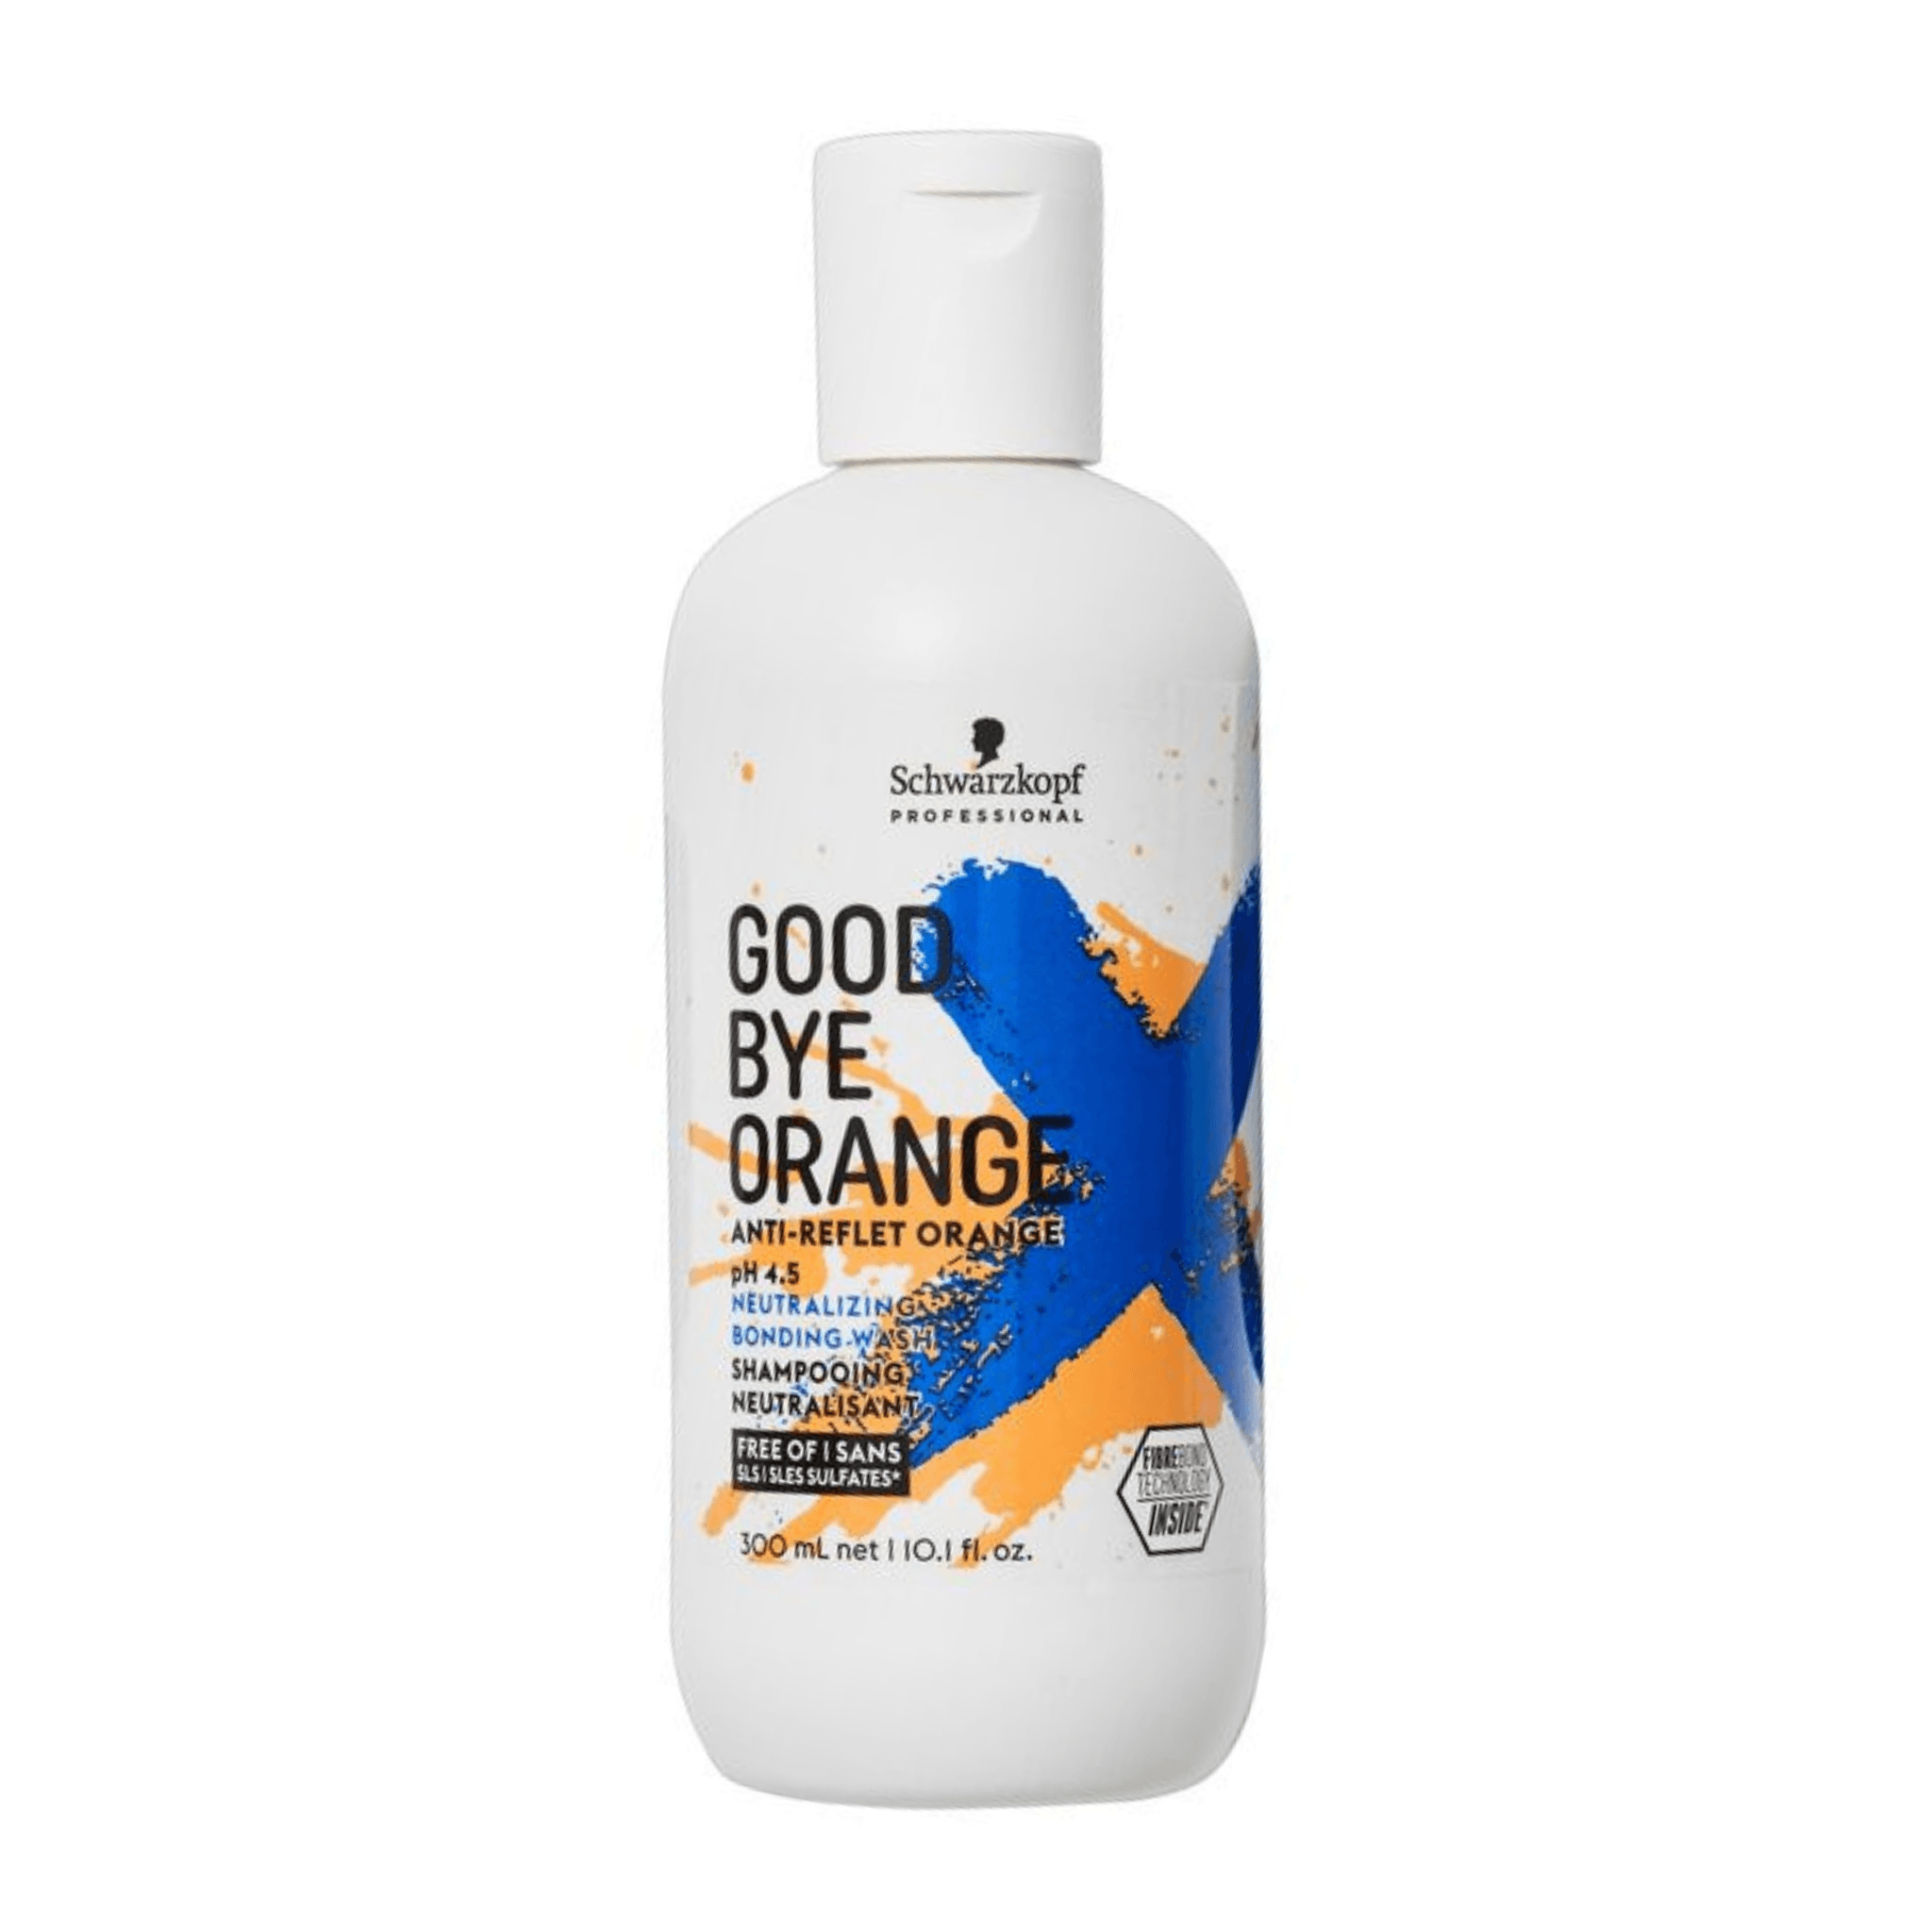 Schwarzkopf. Shampoing Bleu Neutralisant Goodbye Orange - 300 ml - Concept C. Shop